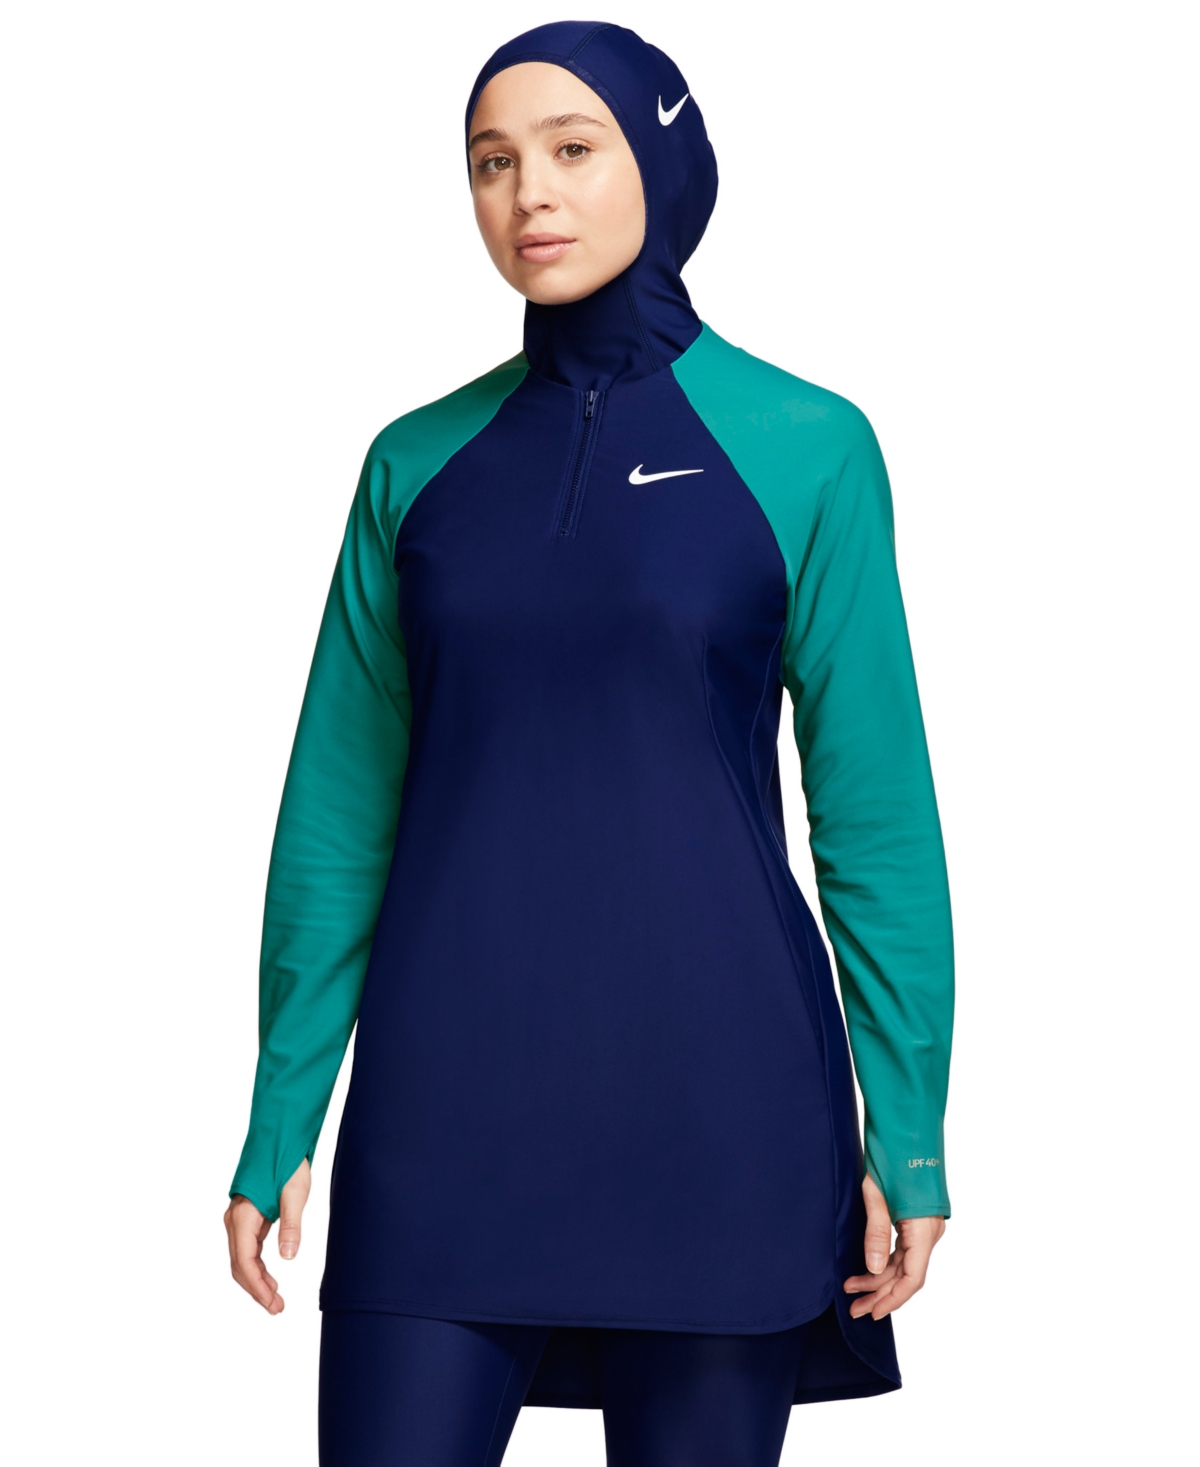 Nike Colorblocked Long-Sleeve Swim Tunic Women's Swimsuit